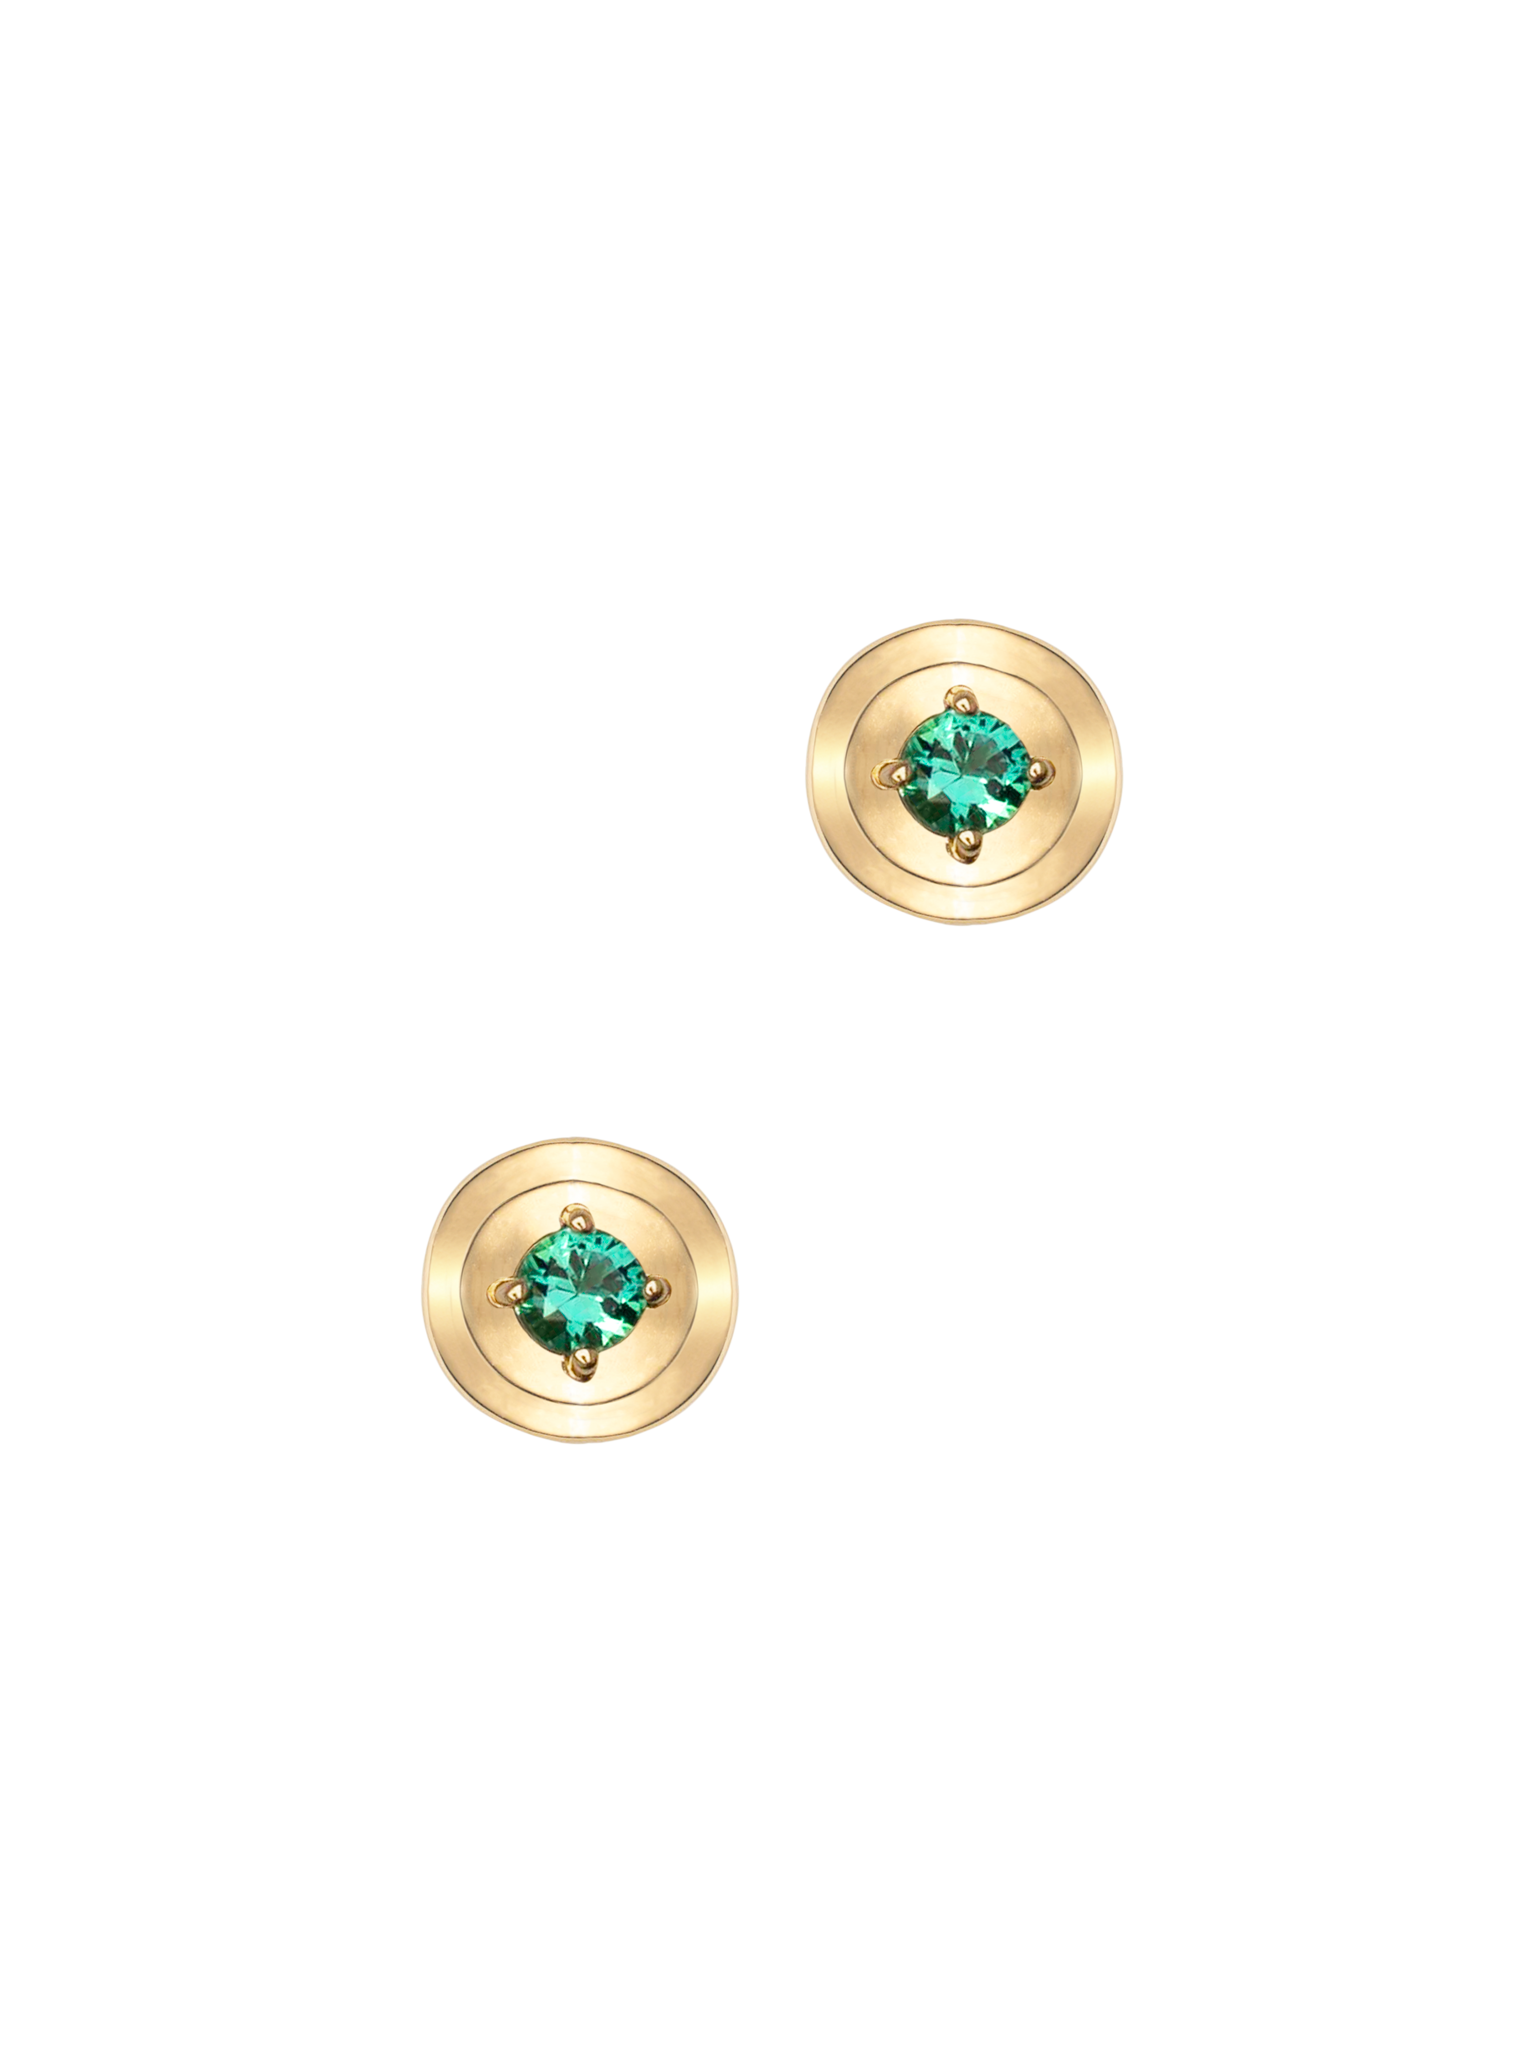 Petite emerald circular staircase studs